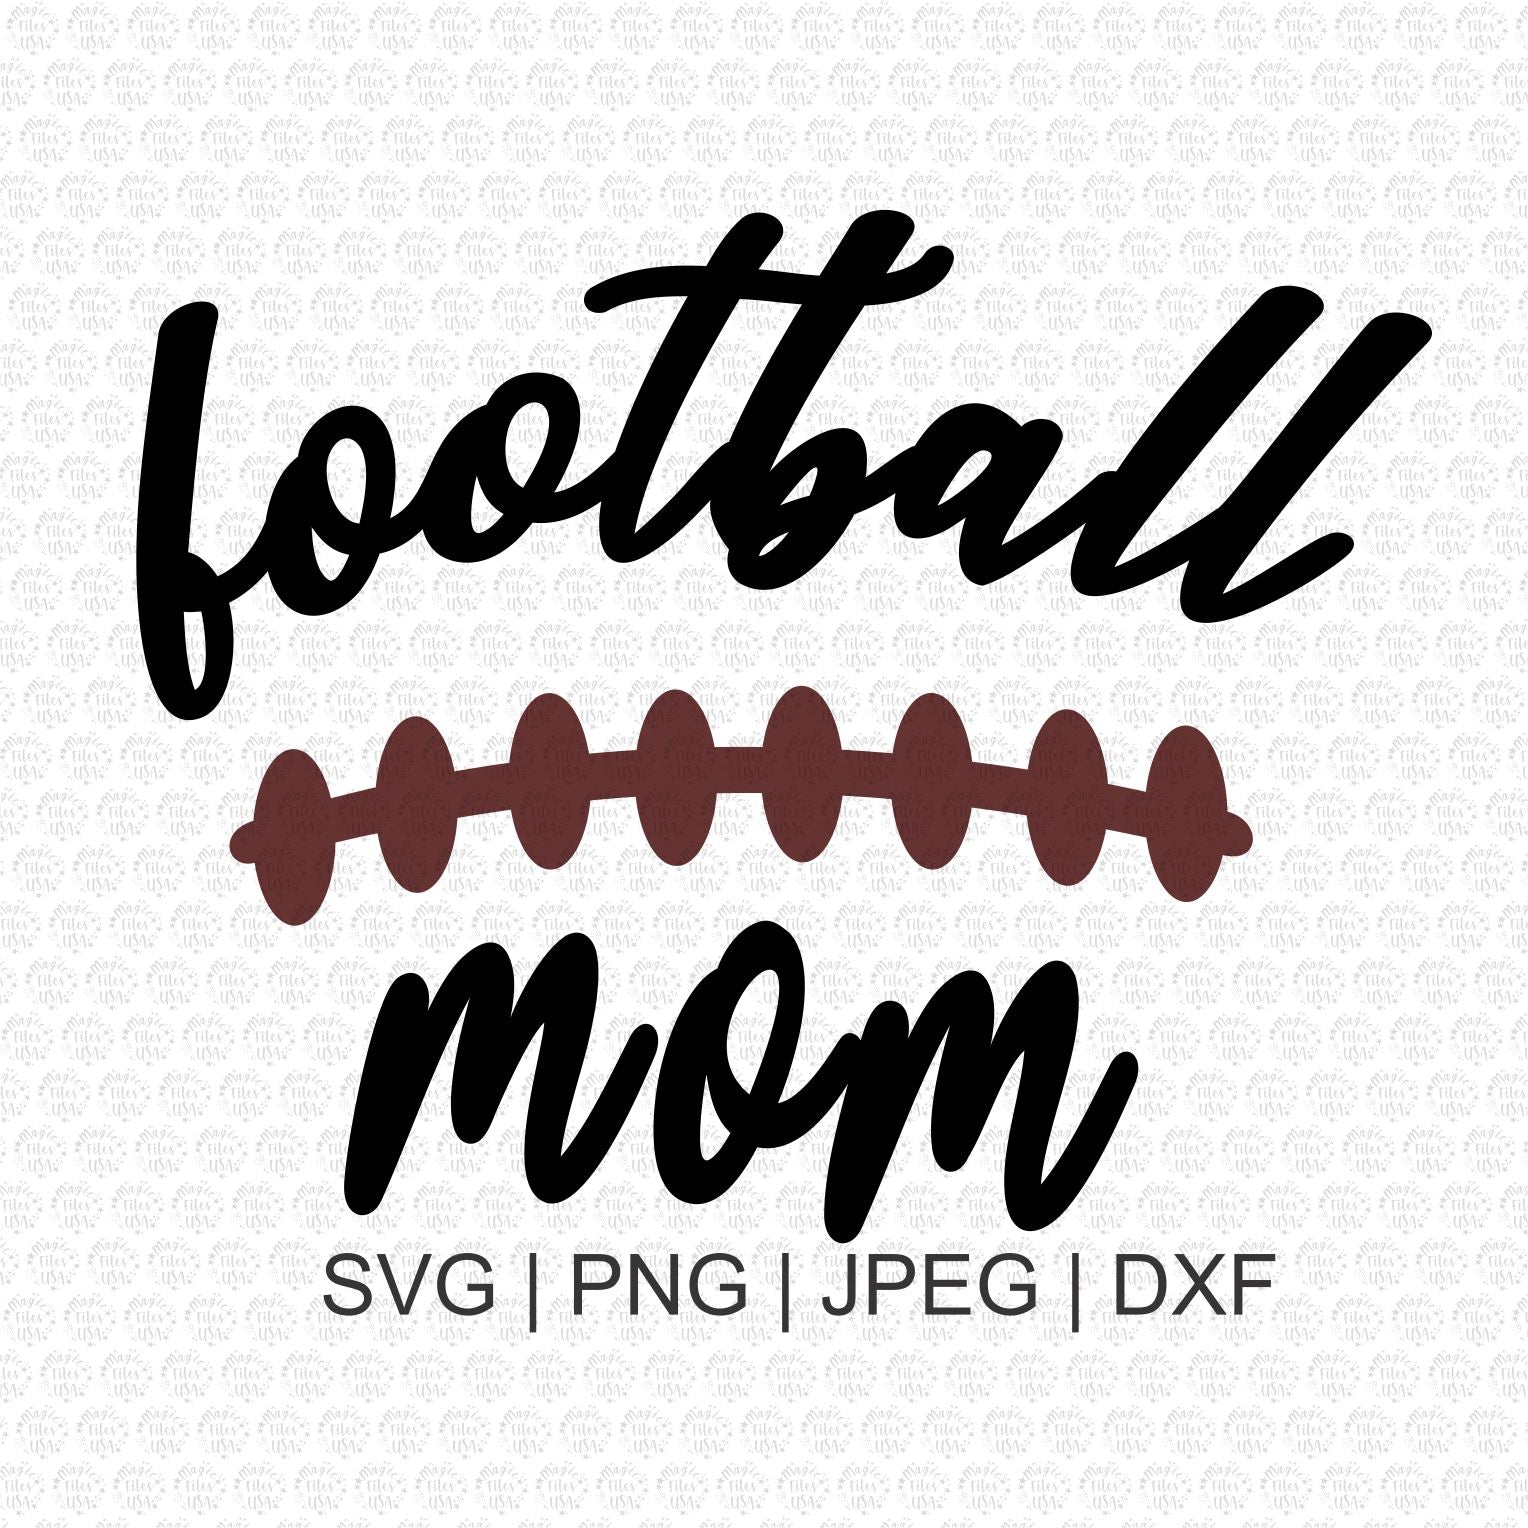 Download Football Mom Svg Svg Files Football Mom Silhouette Svg Cricut Svg Trend Svg My Easy Files